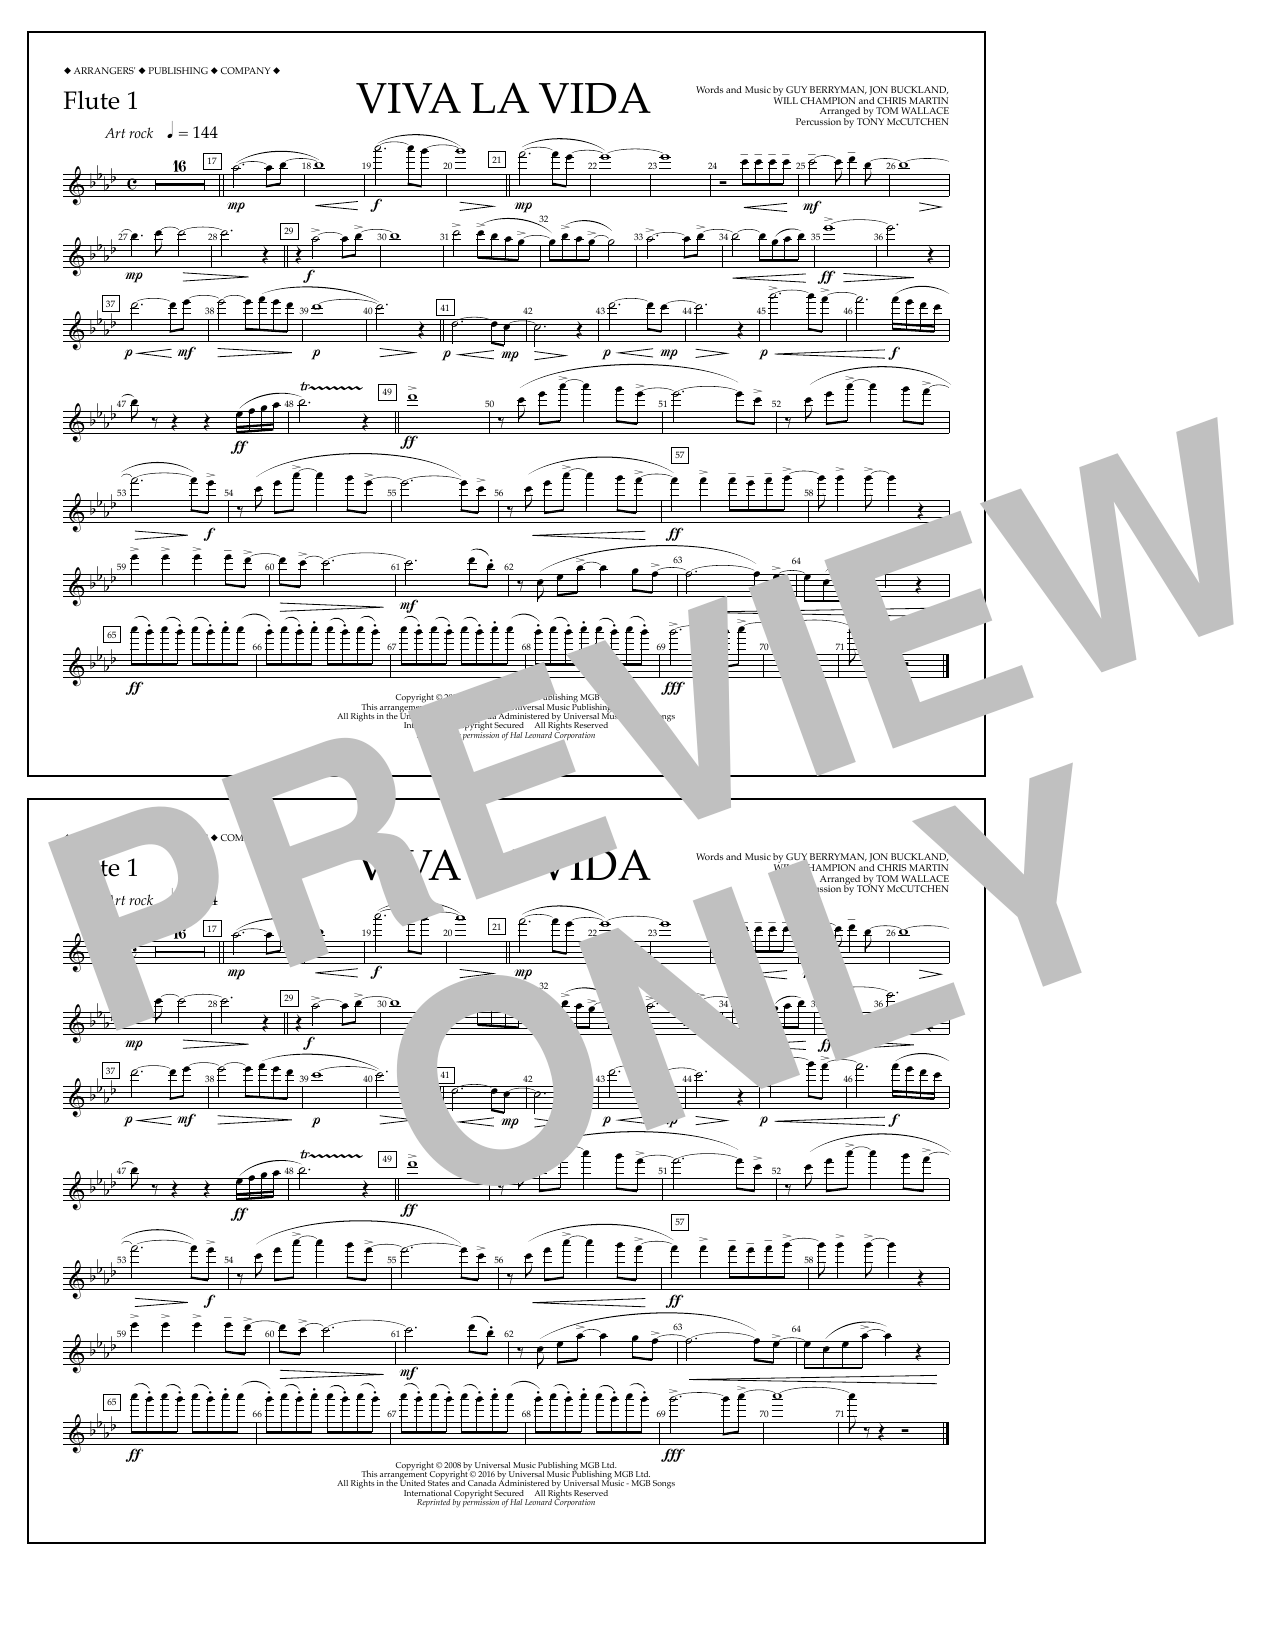 Tom Wallace Viva La Vida - Flute 1 Sheet Music Notes & Chords for Marching Band - Download or Print PDF